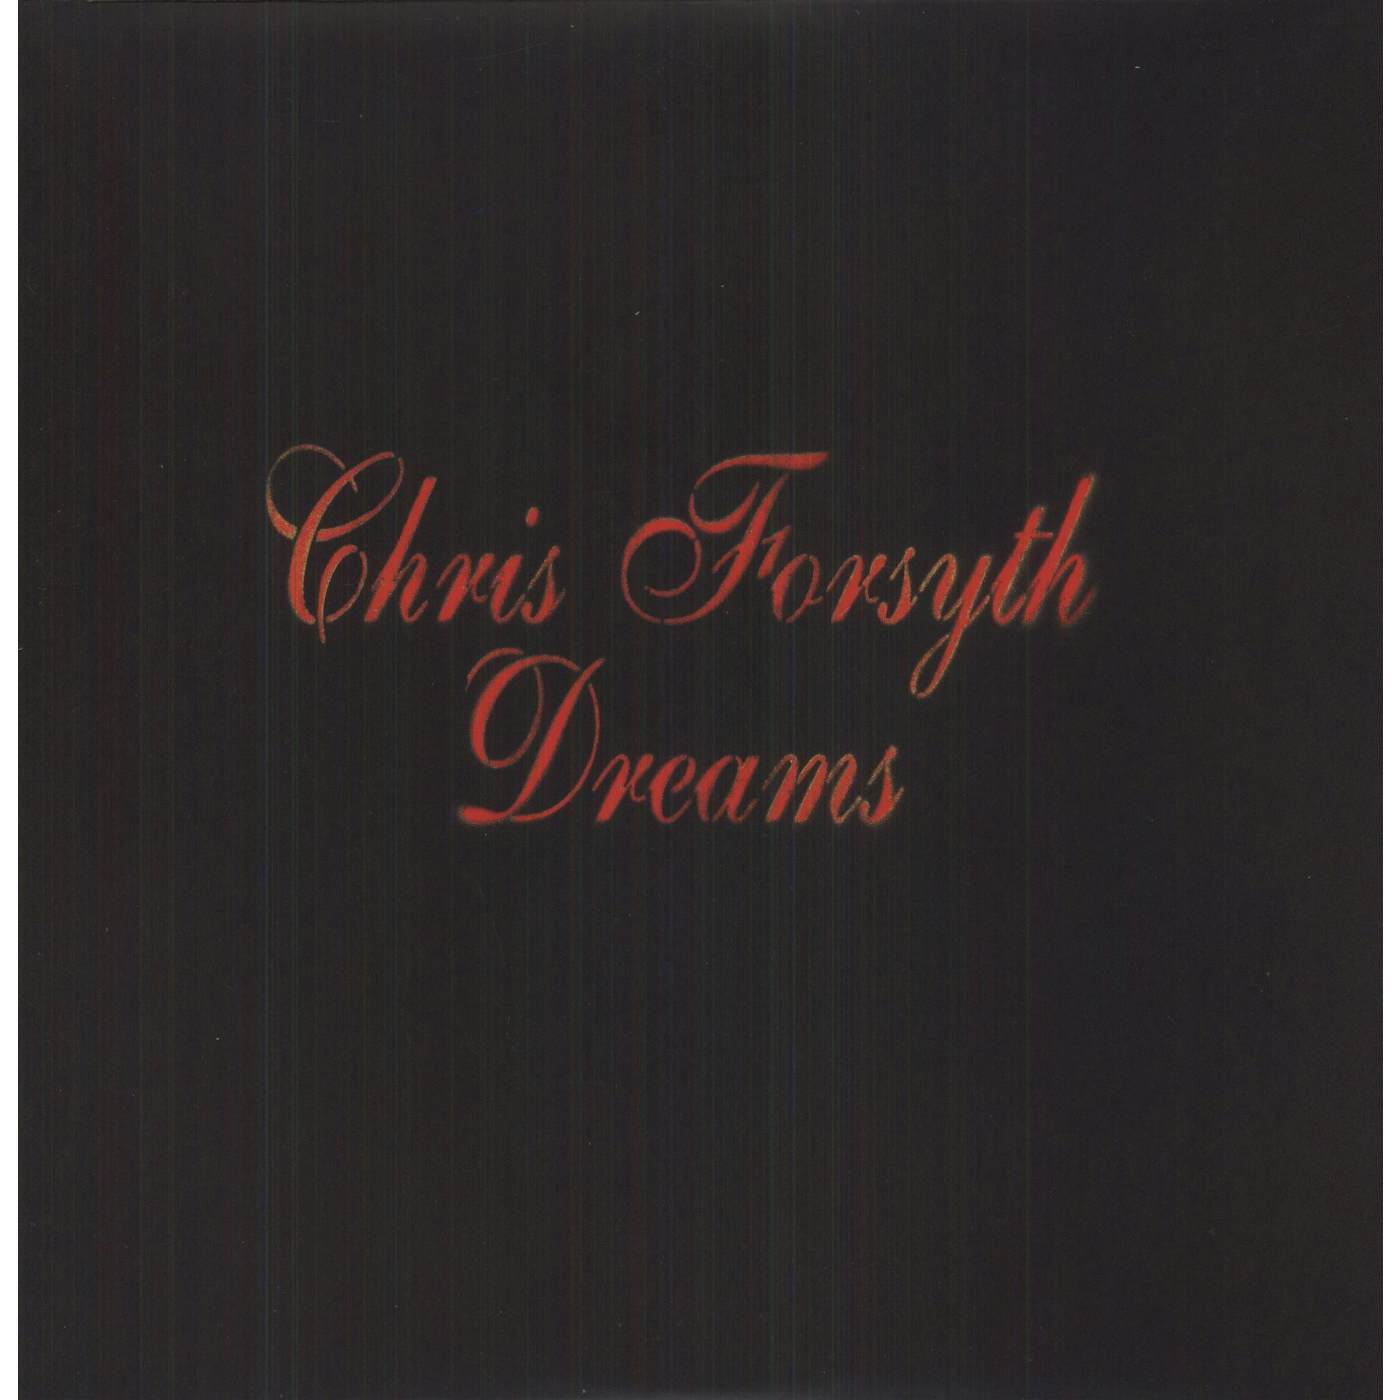 Chris Forsyth Dreams Vinyl Record